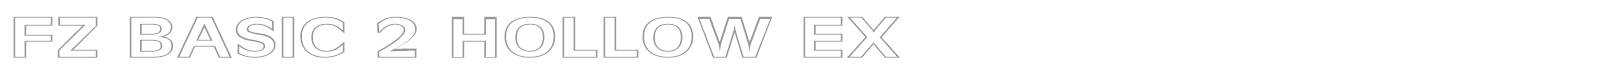 FZ BASIC 2 HOLLOW EX font preview